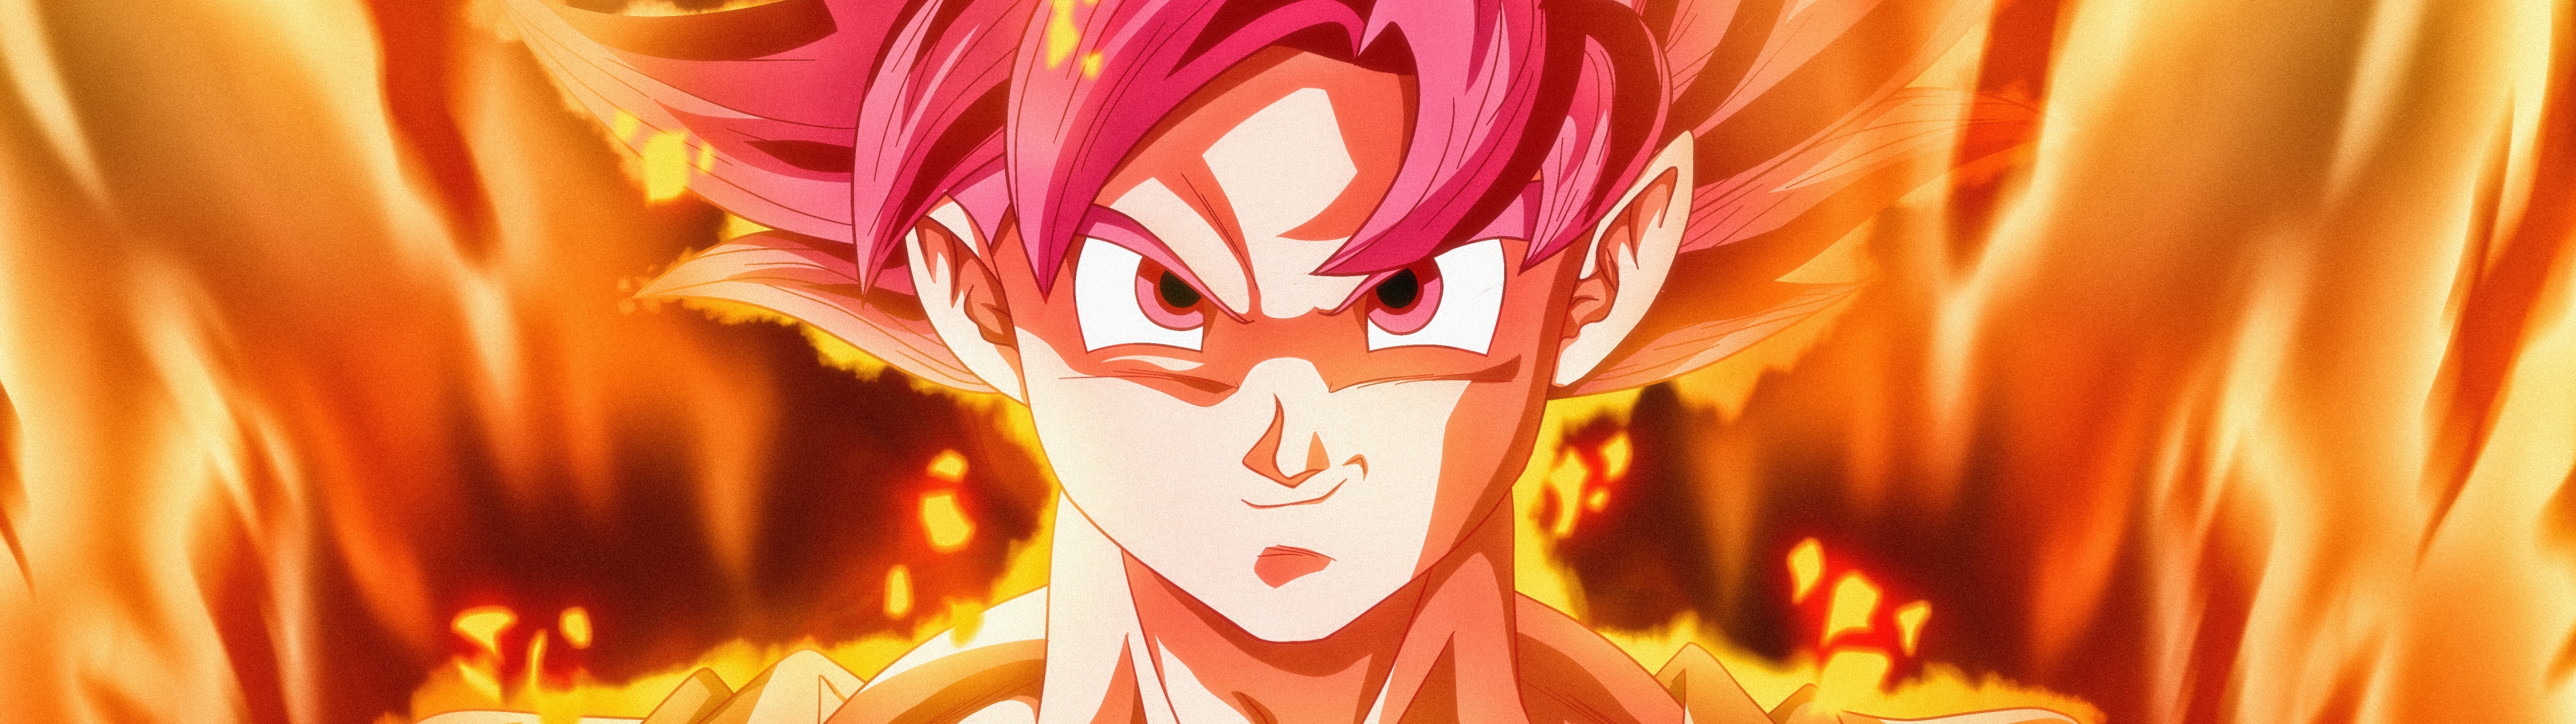 Super Saiyan God Wallpaper 4K, Goku, Dragon Ball Super, 5K, Anime